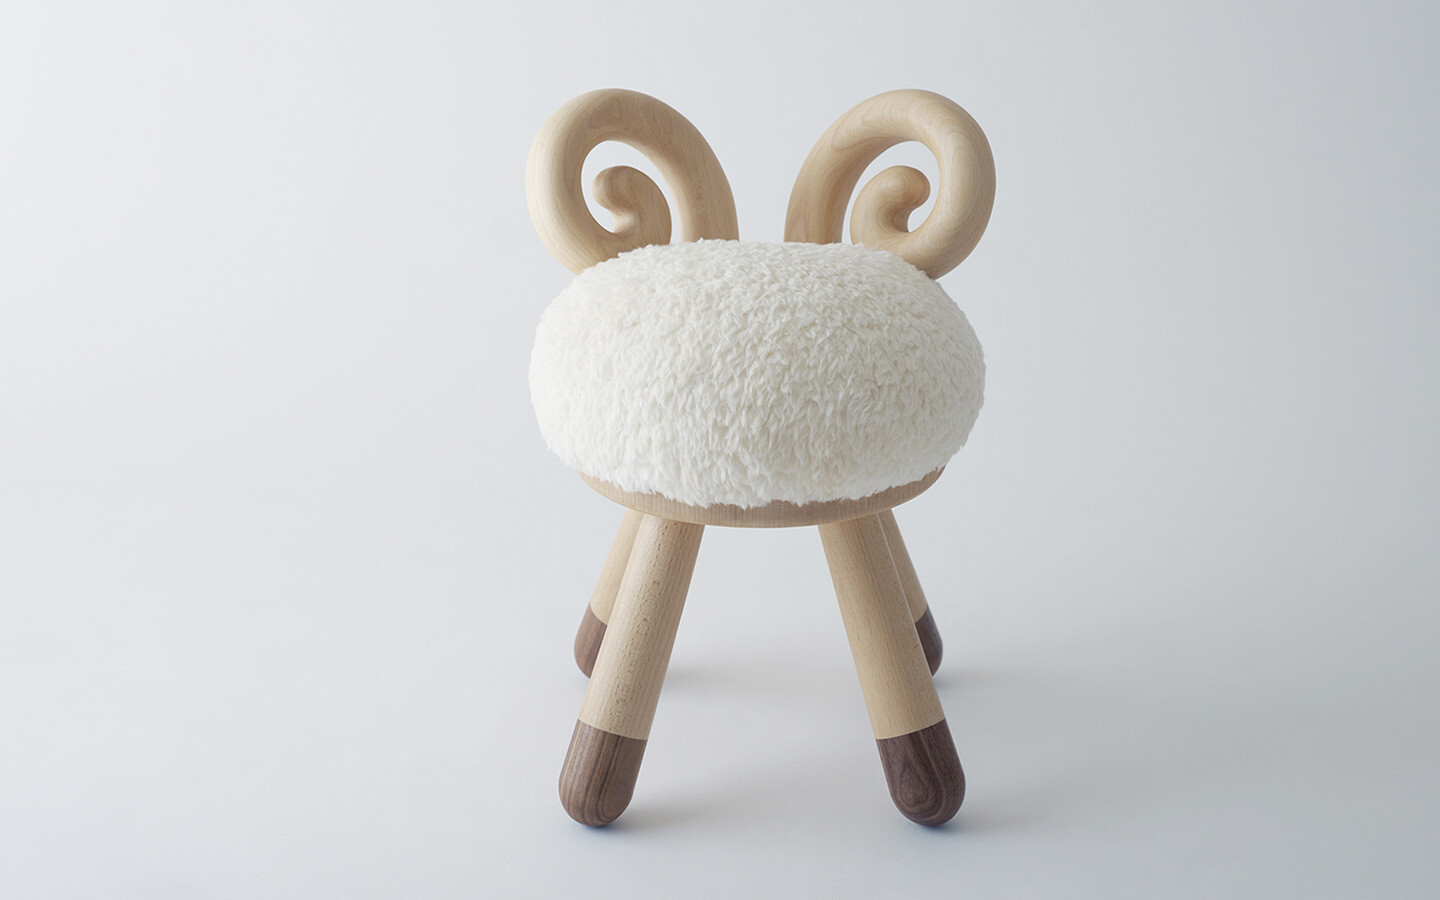 Collection of chairs-toys Takeshi Sawada bring joy to children - HomeWorldDesign (5)